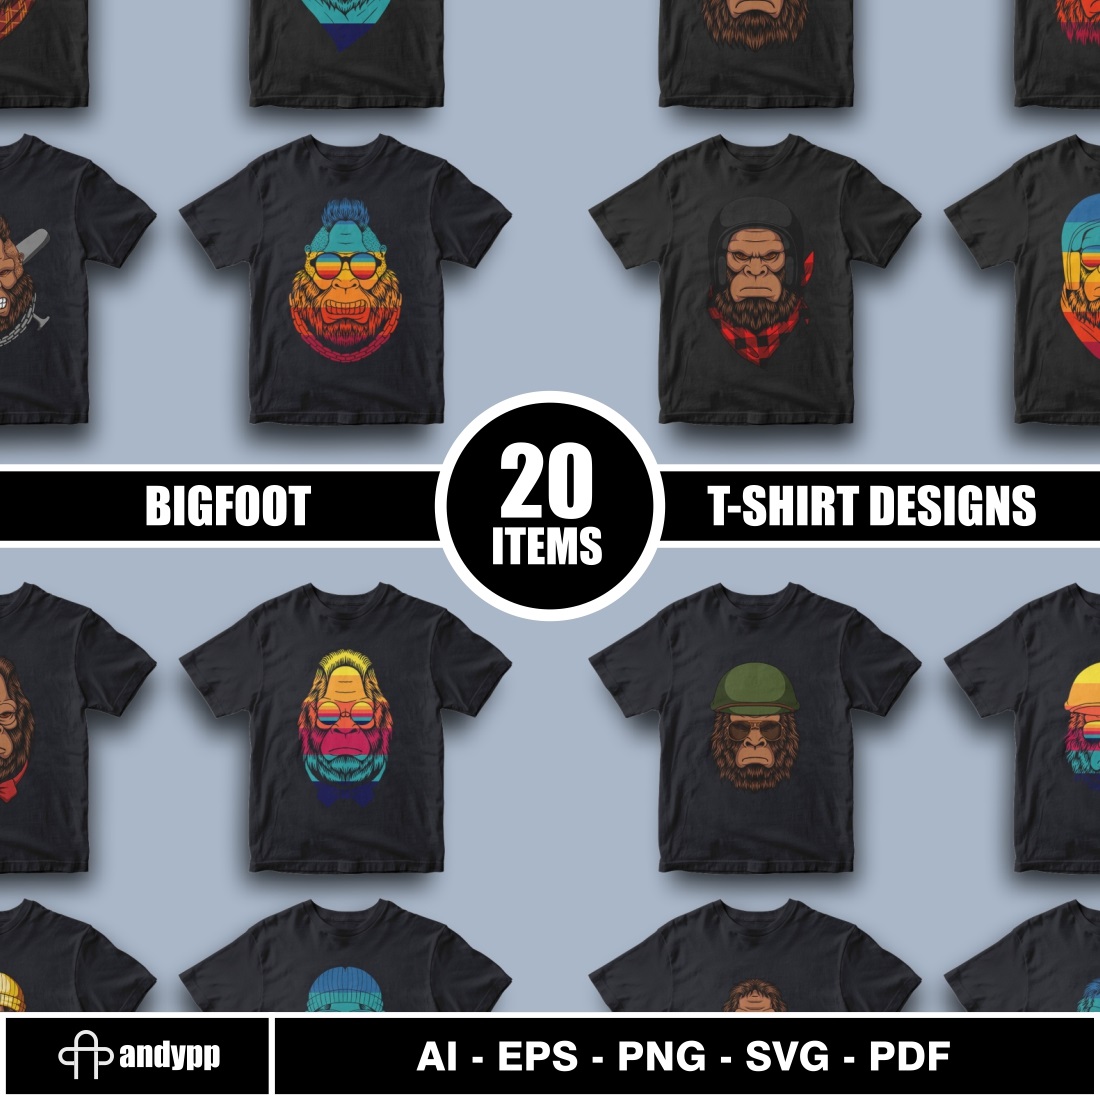 20 Bigfoot Retro T-shirts Design in bundles cover image.